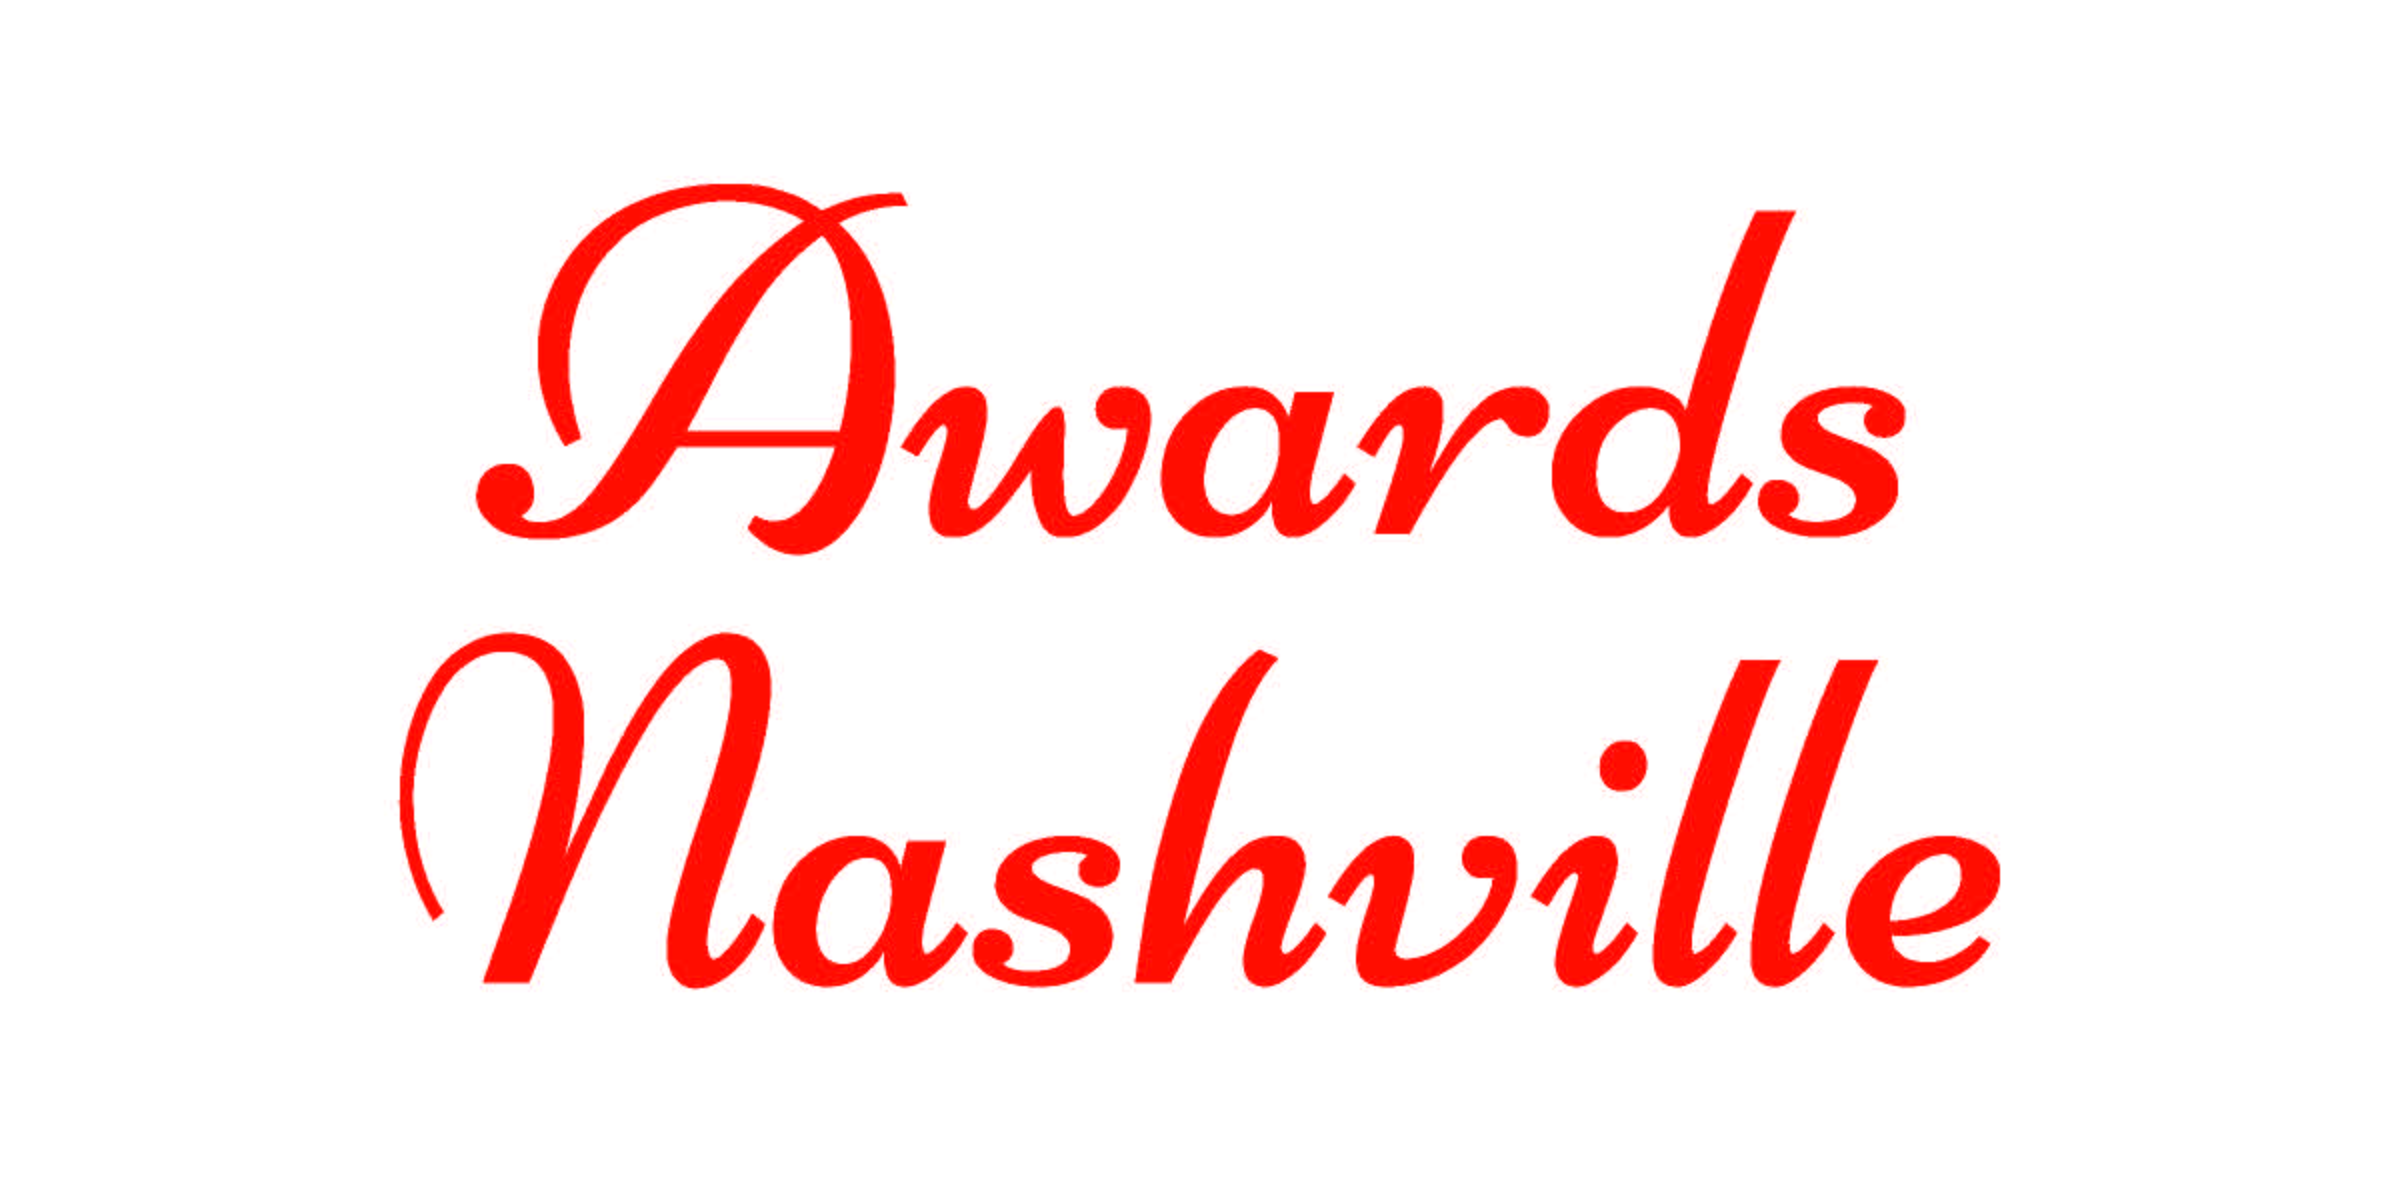 Awards Nashville